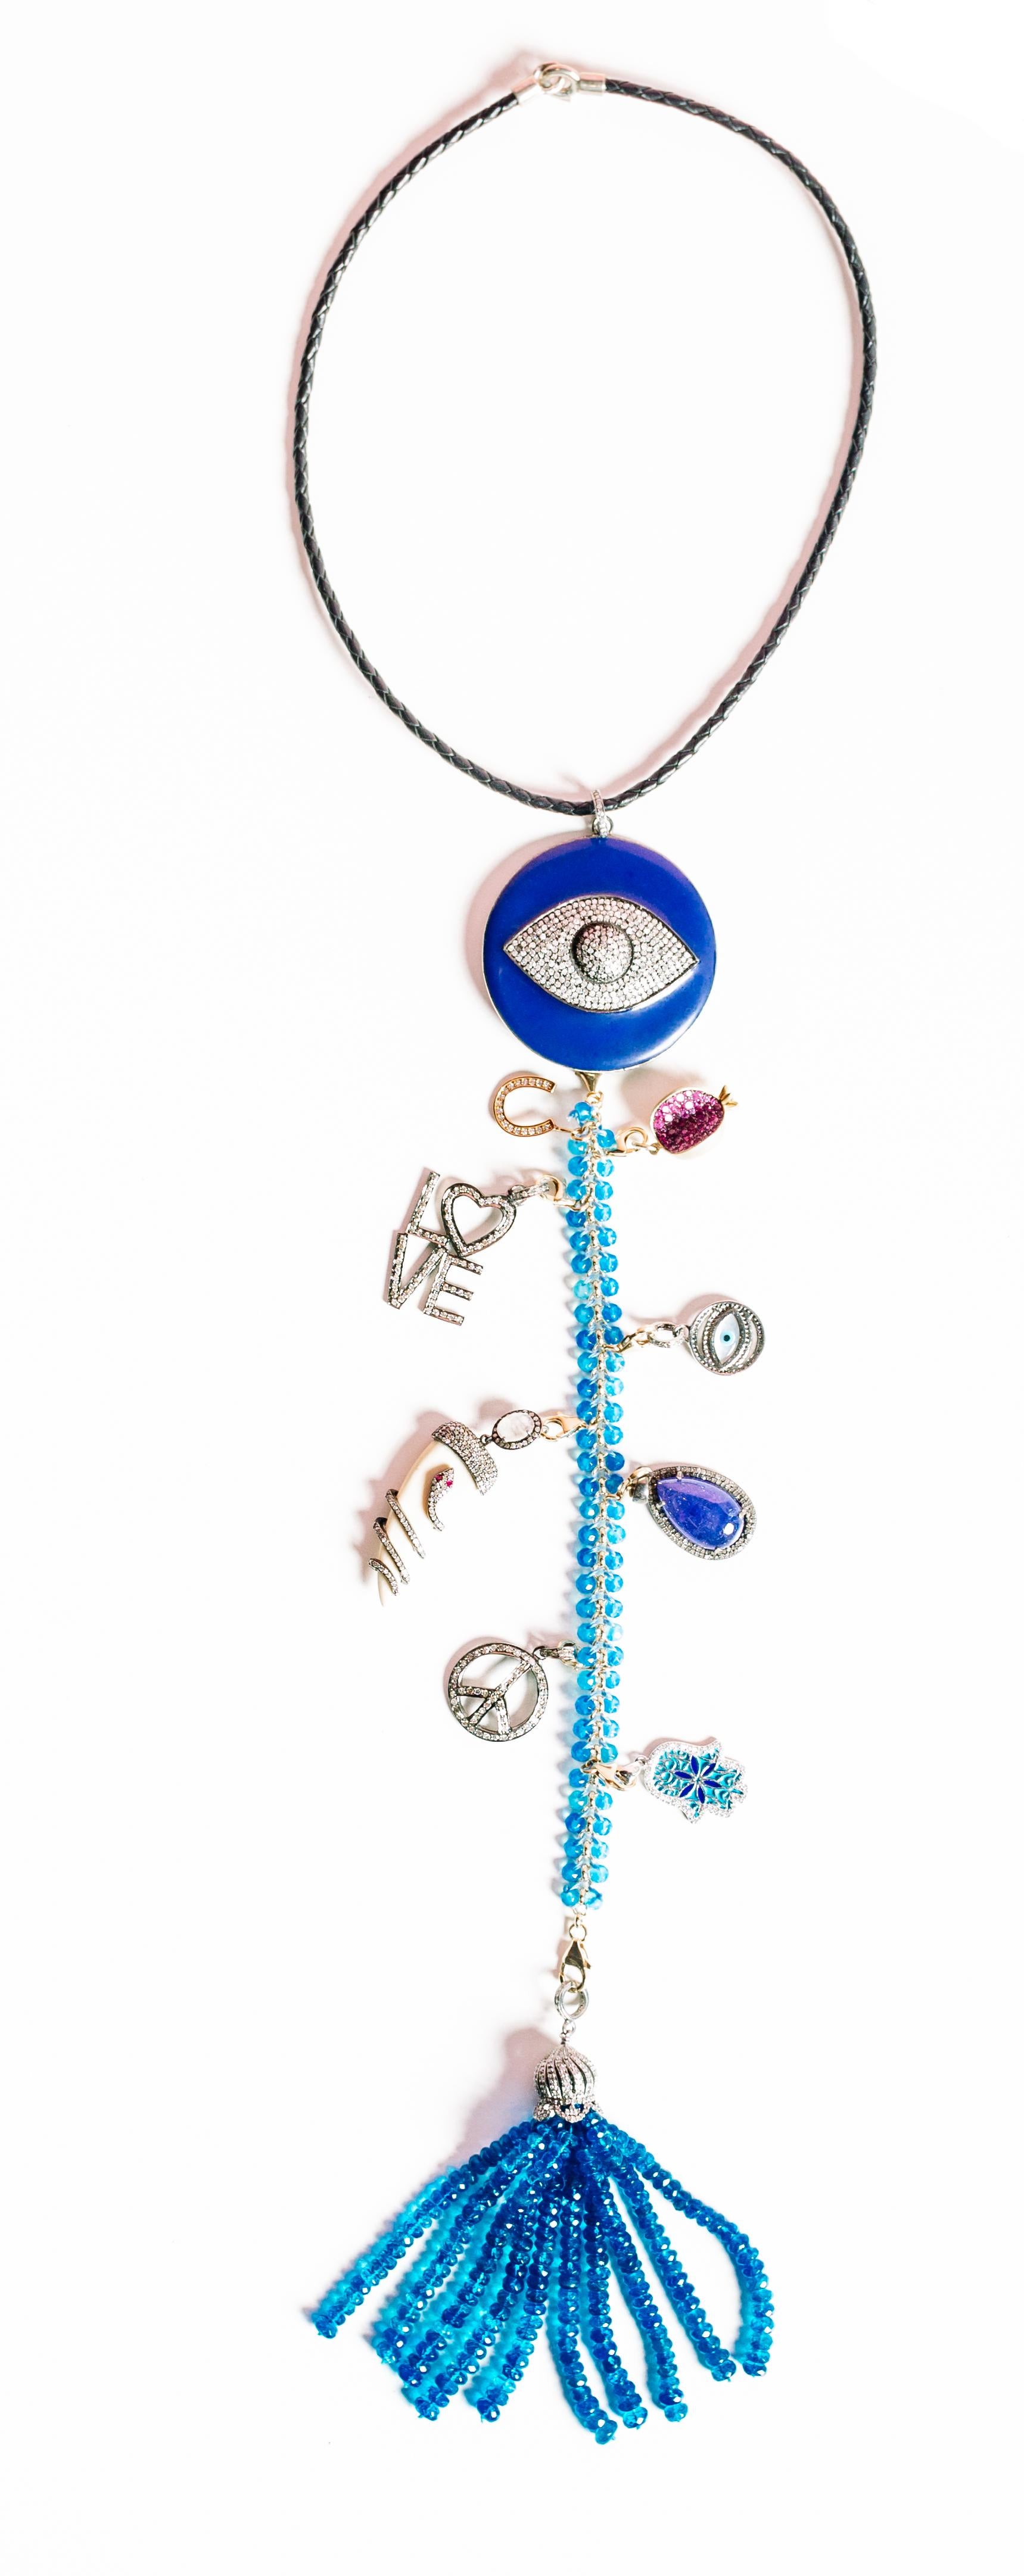 Contemporary Clarissa Bronfman 'Blue Is the Warmest Color' Symbol Tree Necklace